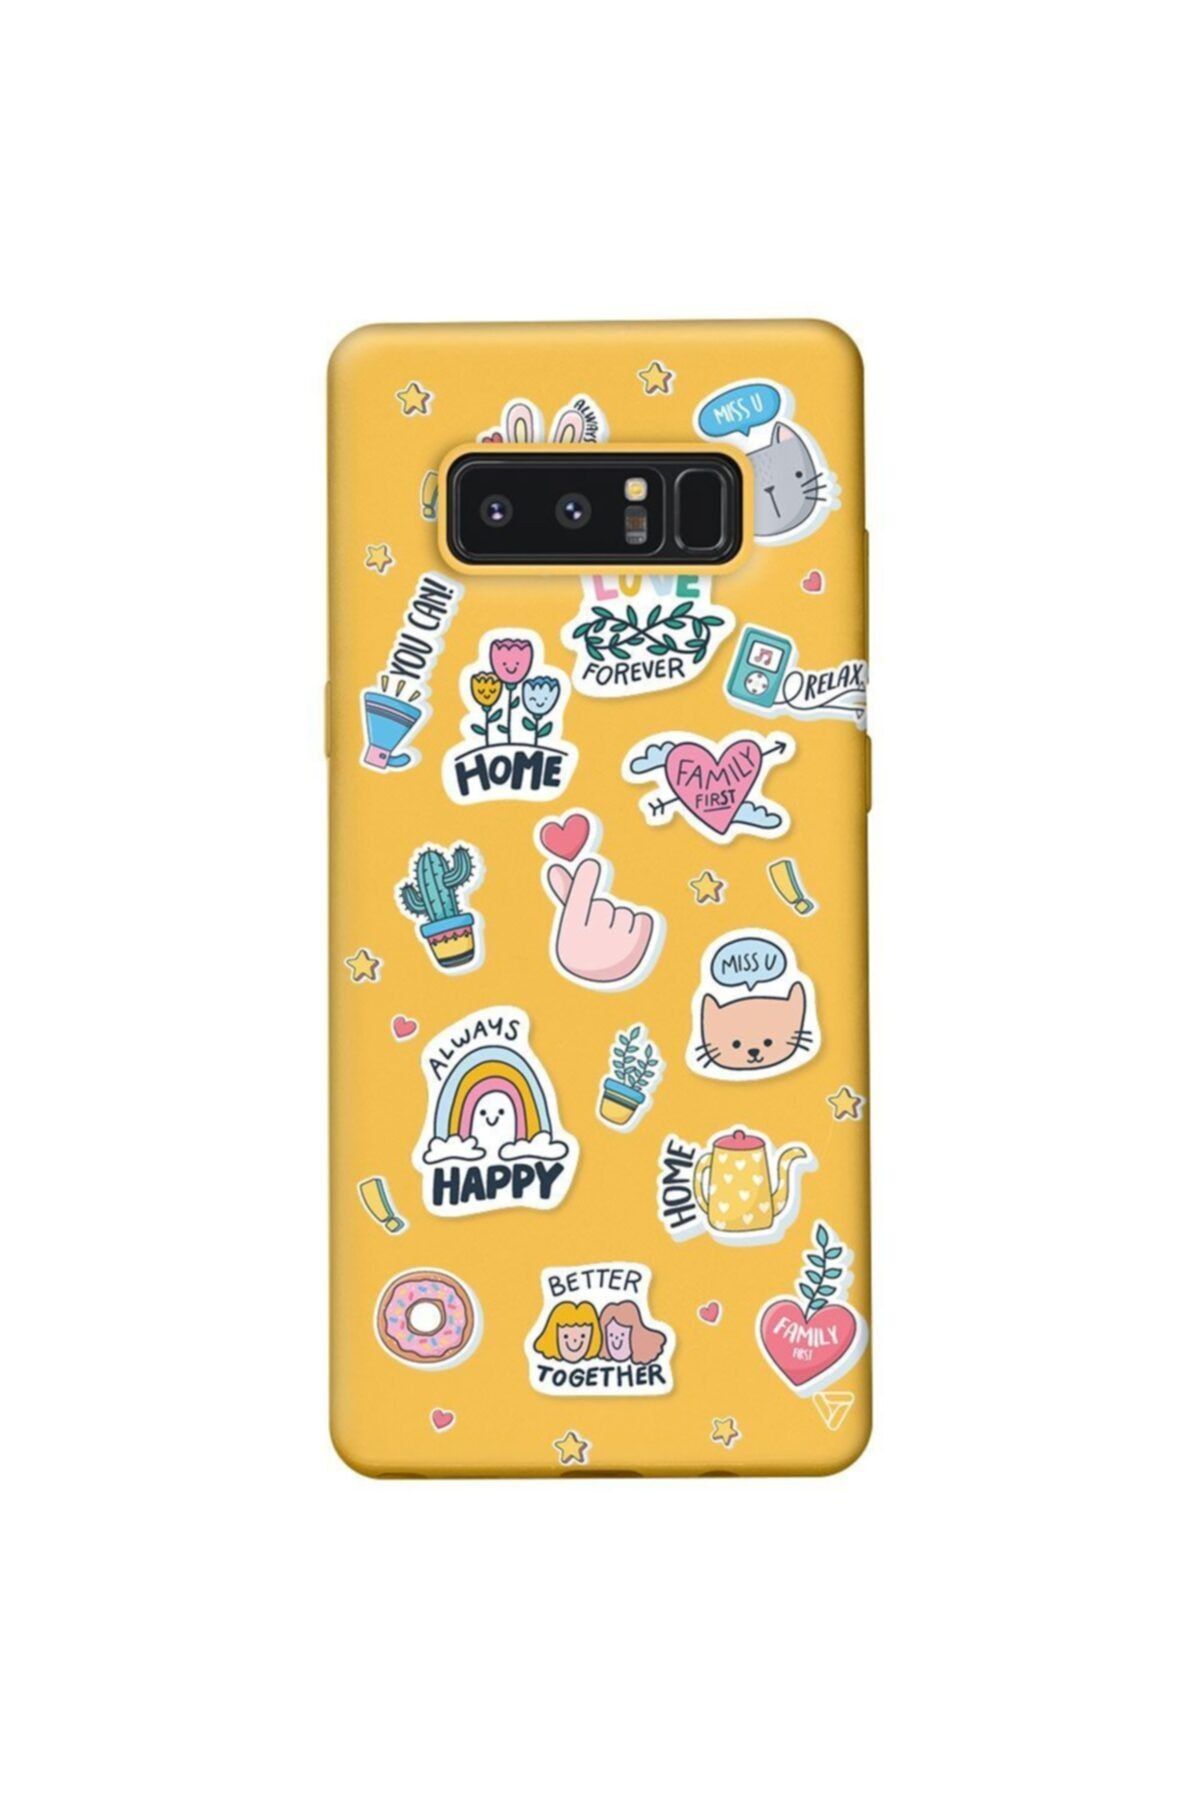 Trihed Samsung Note 8 Sarı Renkli Silikon Always Happy Telefon Kılıfı